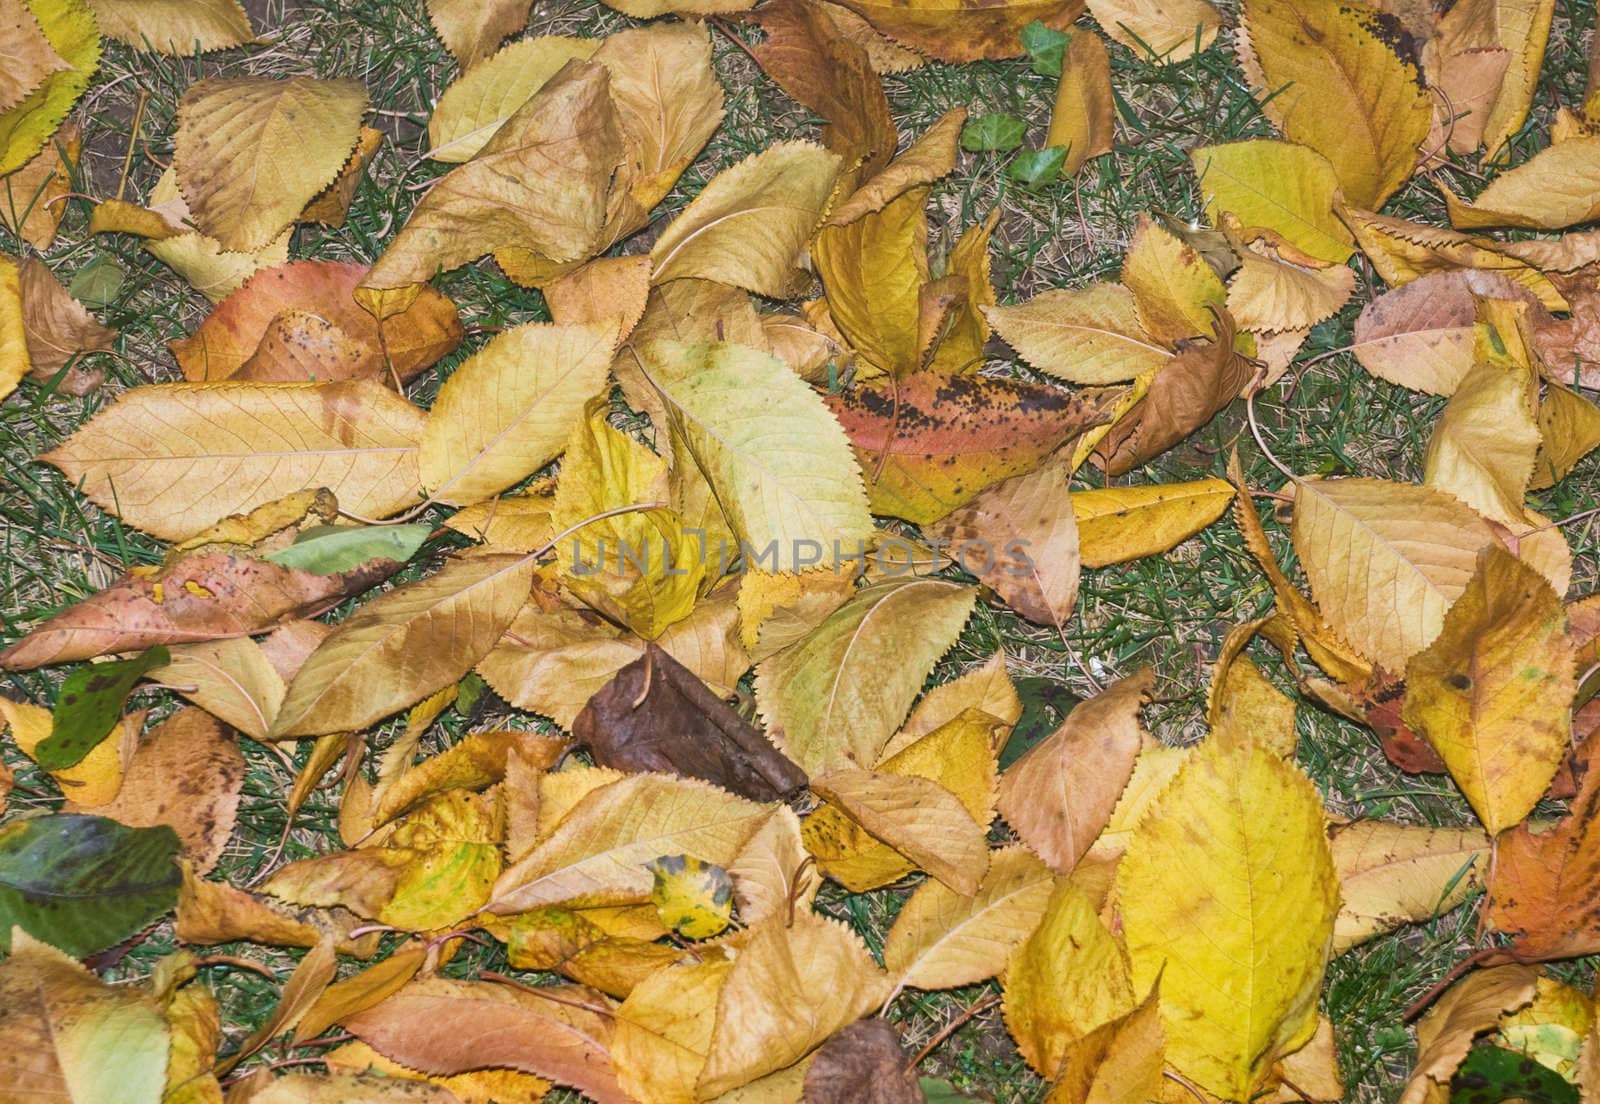 dry leaves spread over grass in november 